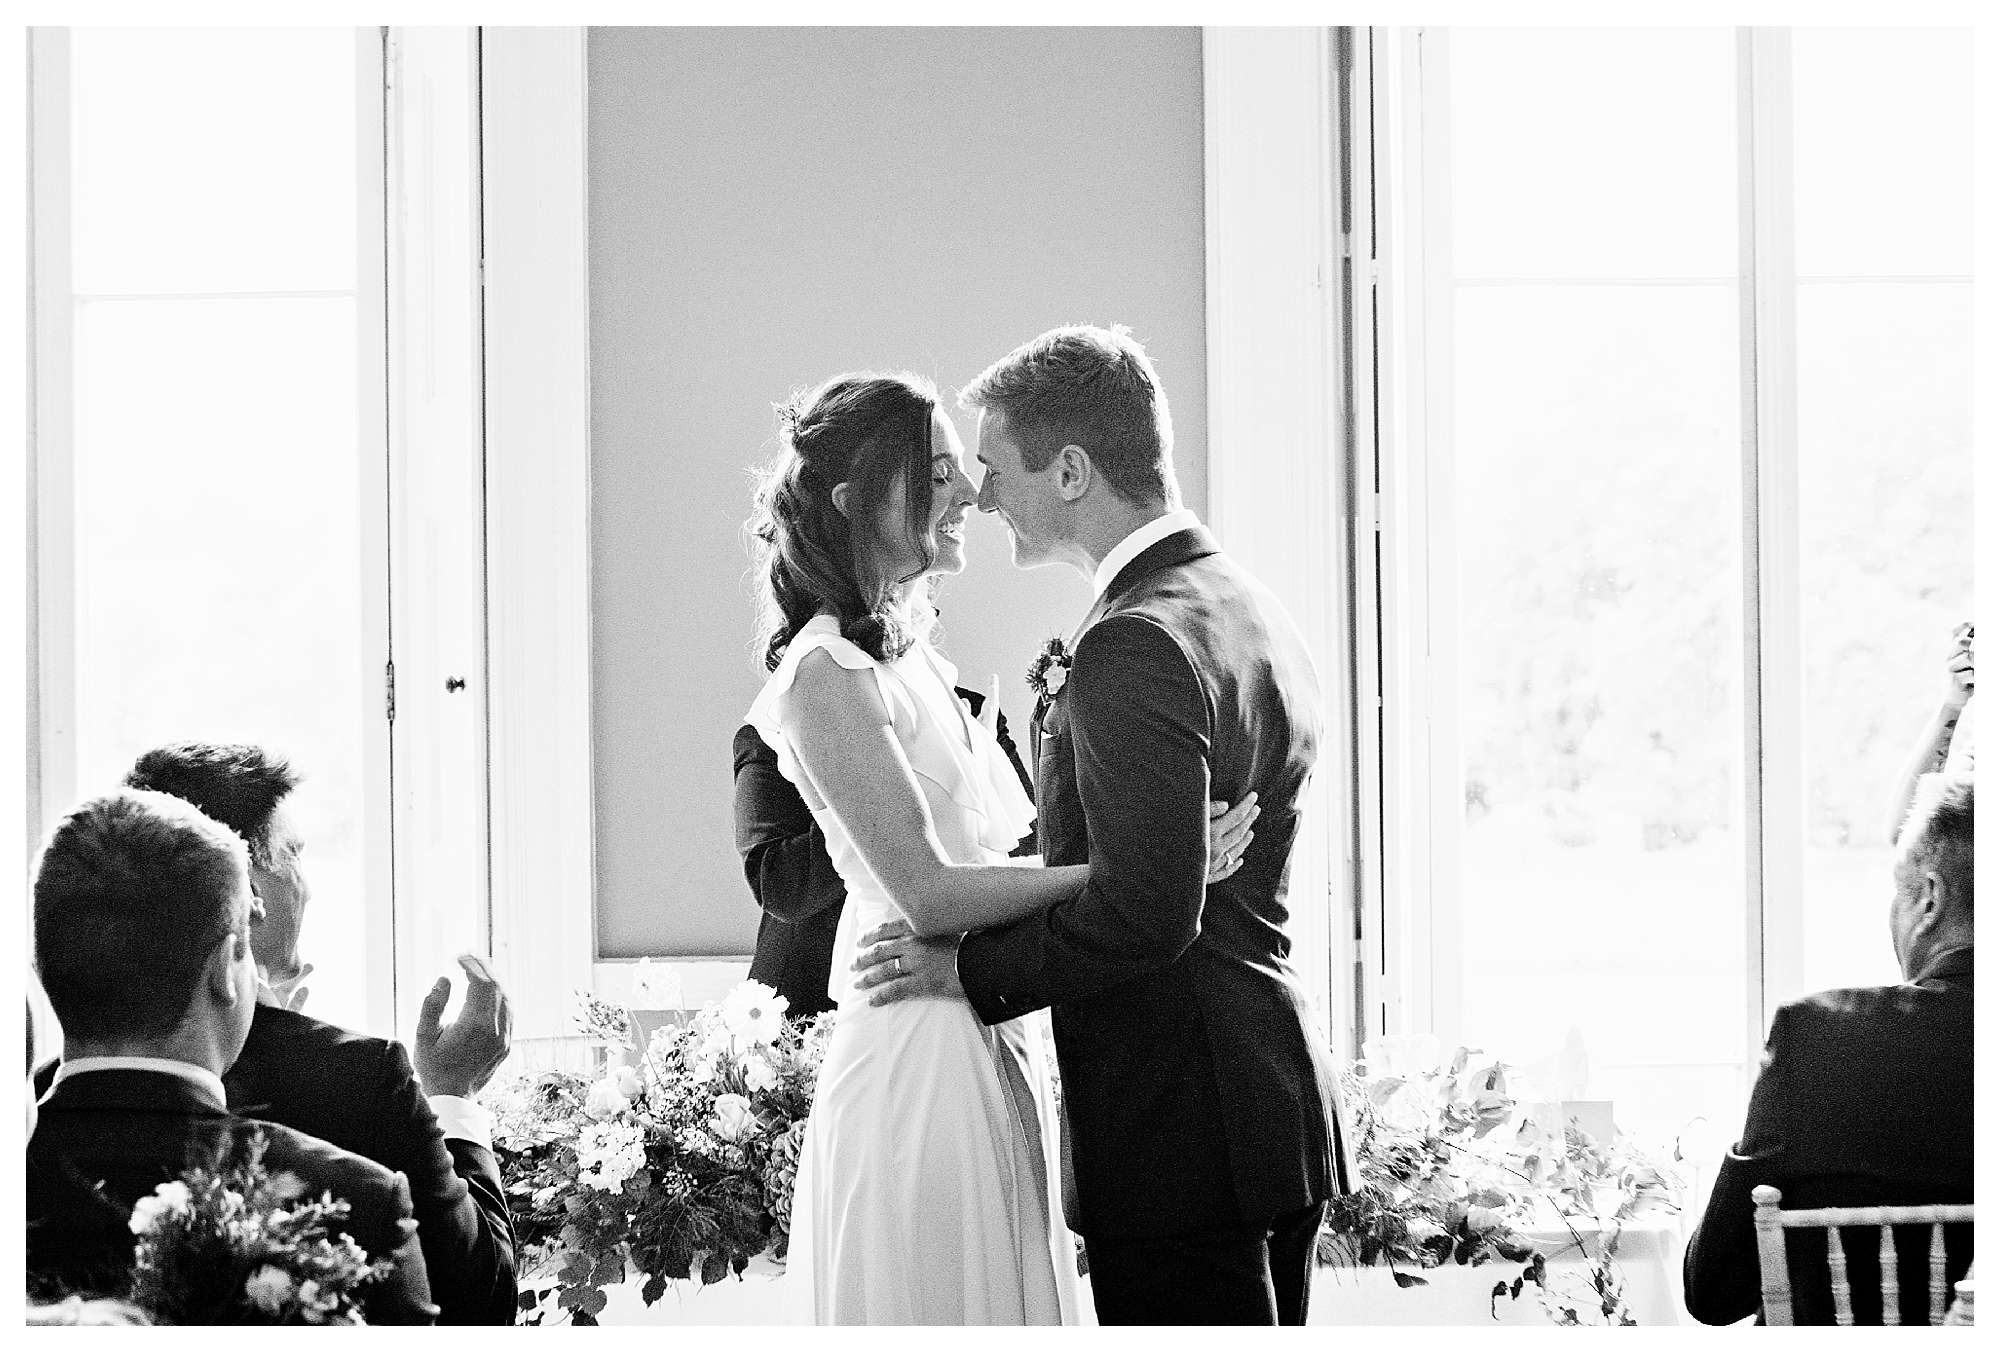 Penton Park- Weddings at Penton Park- Wedding Photography Penton Park- Wedding Photographer Penton Park- Wedding Photographer Penton